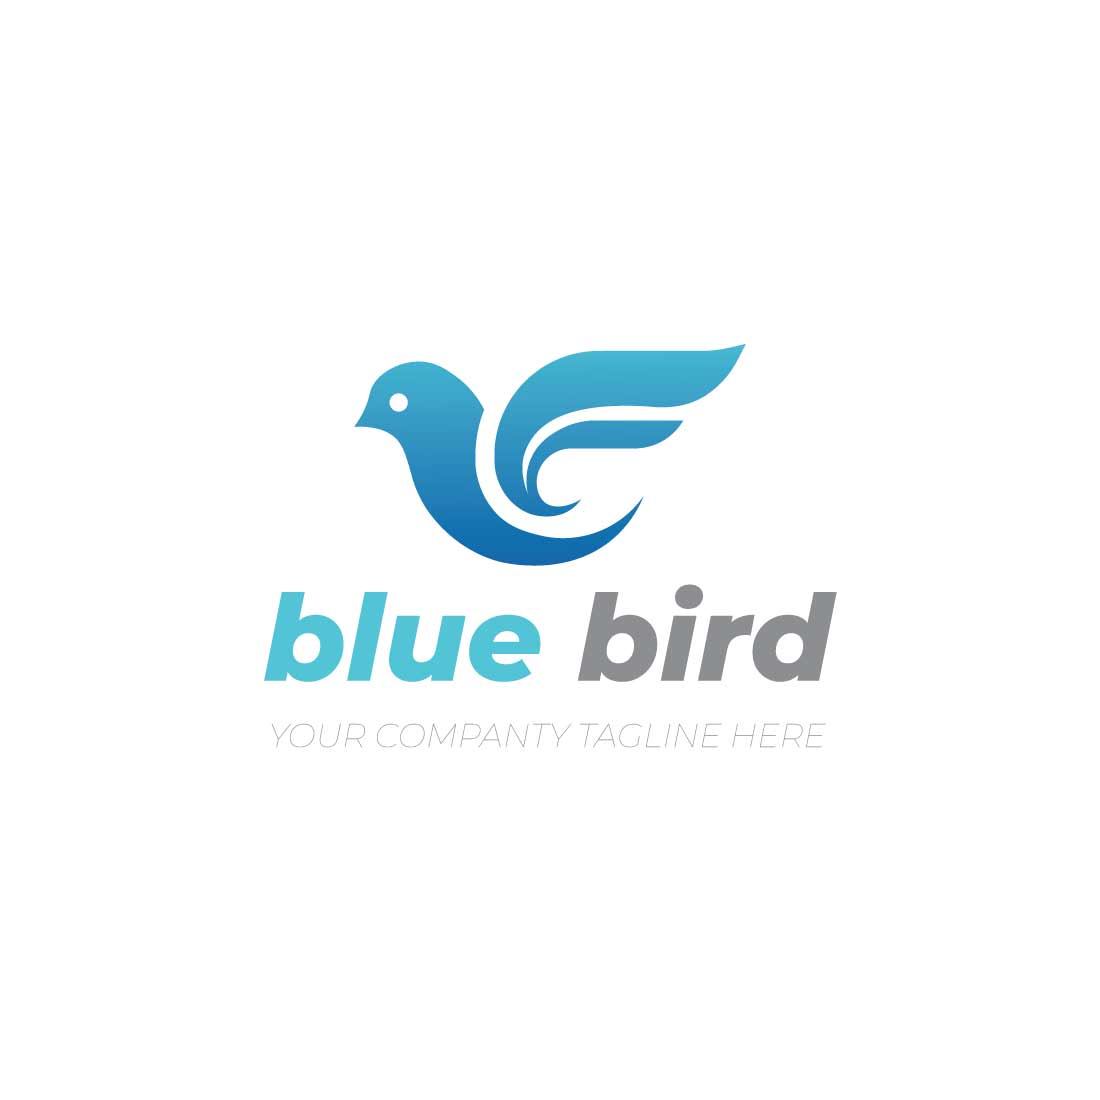 Blue bird logo design preview image.